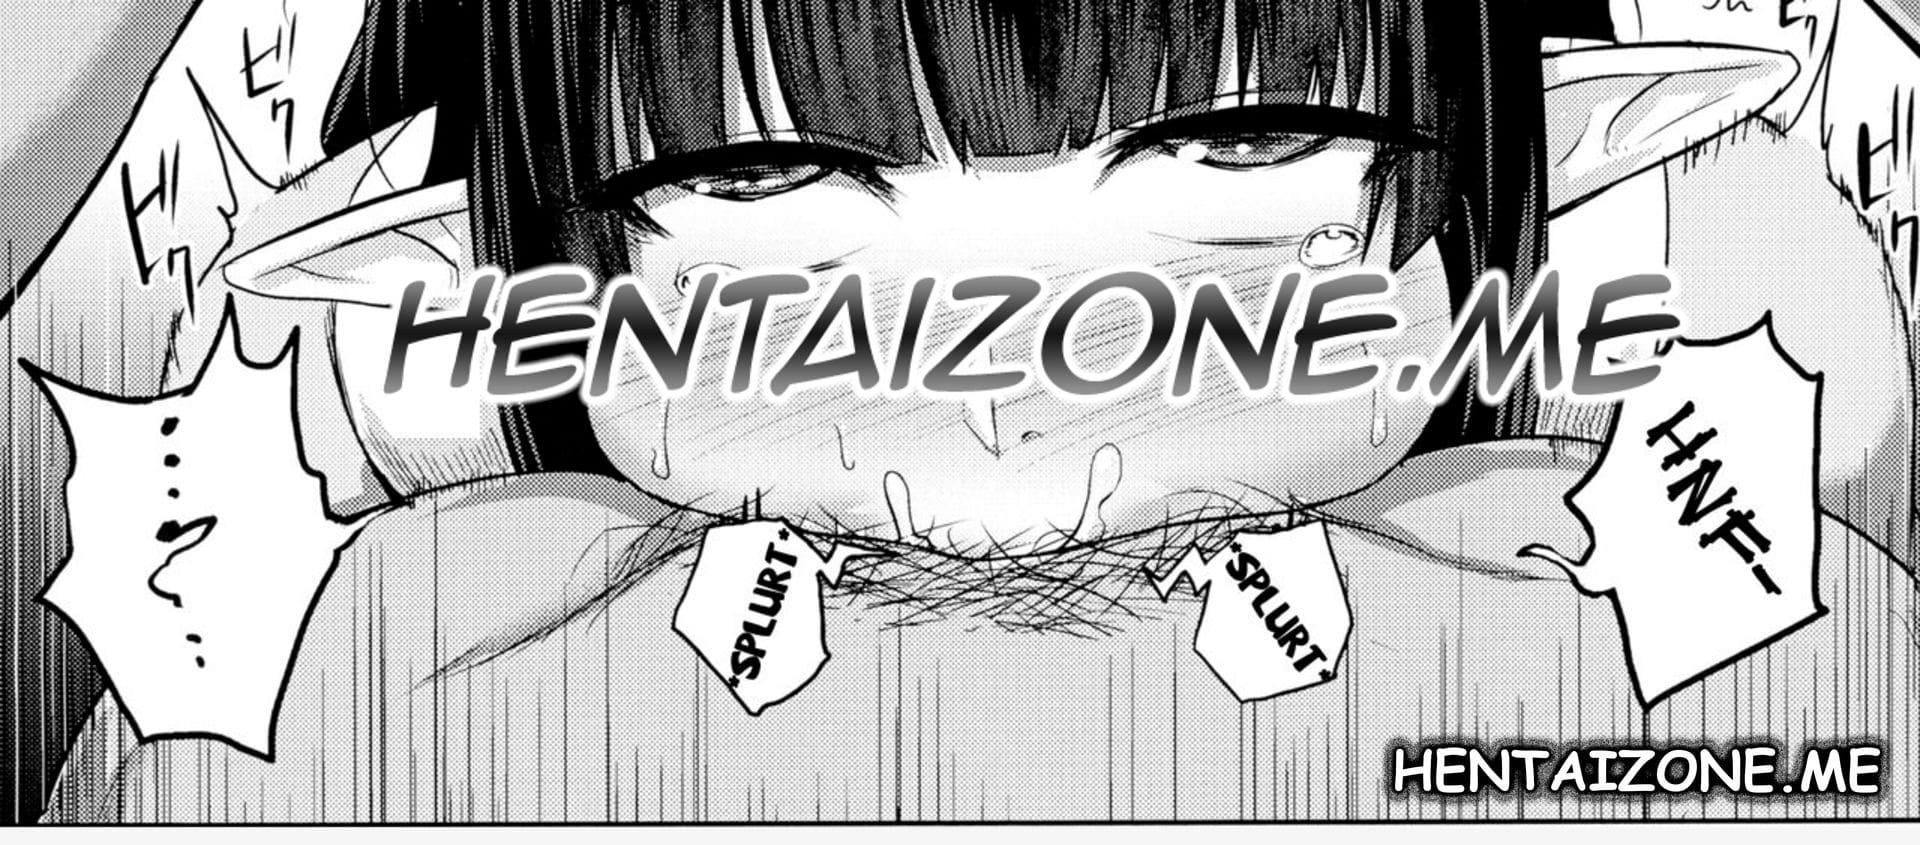 Hentaizone.me â€¢ Hentai Zone